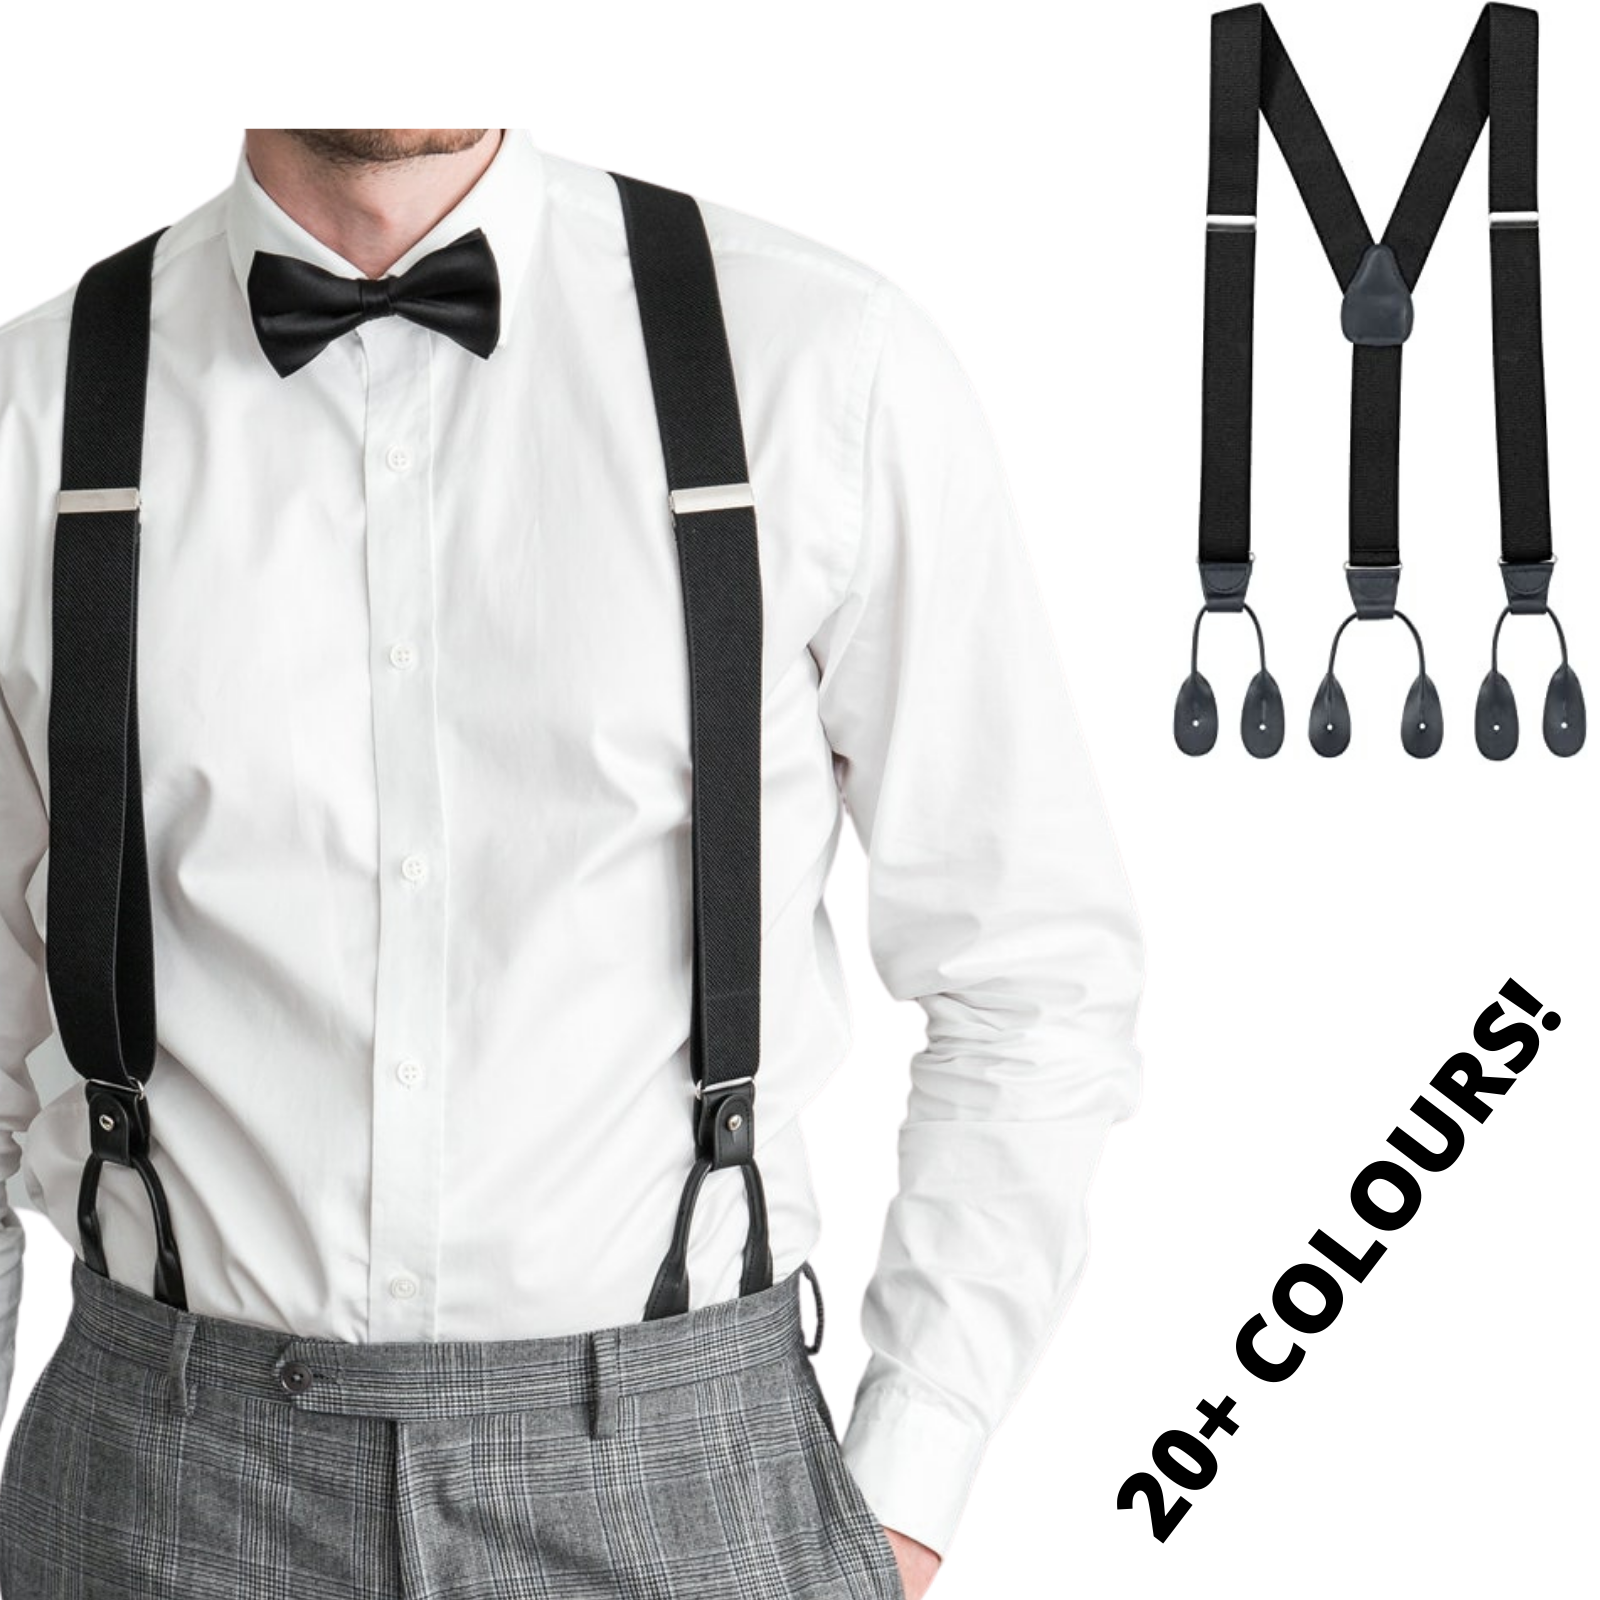 Men's Clip-On Floral Suspenders Y-Back Braces Adjustable Elastic Straps